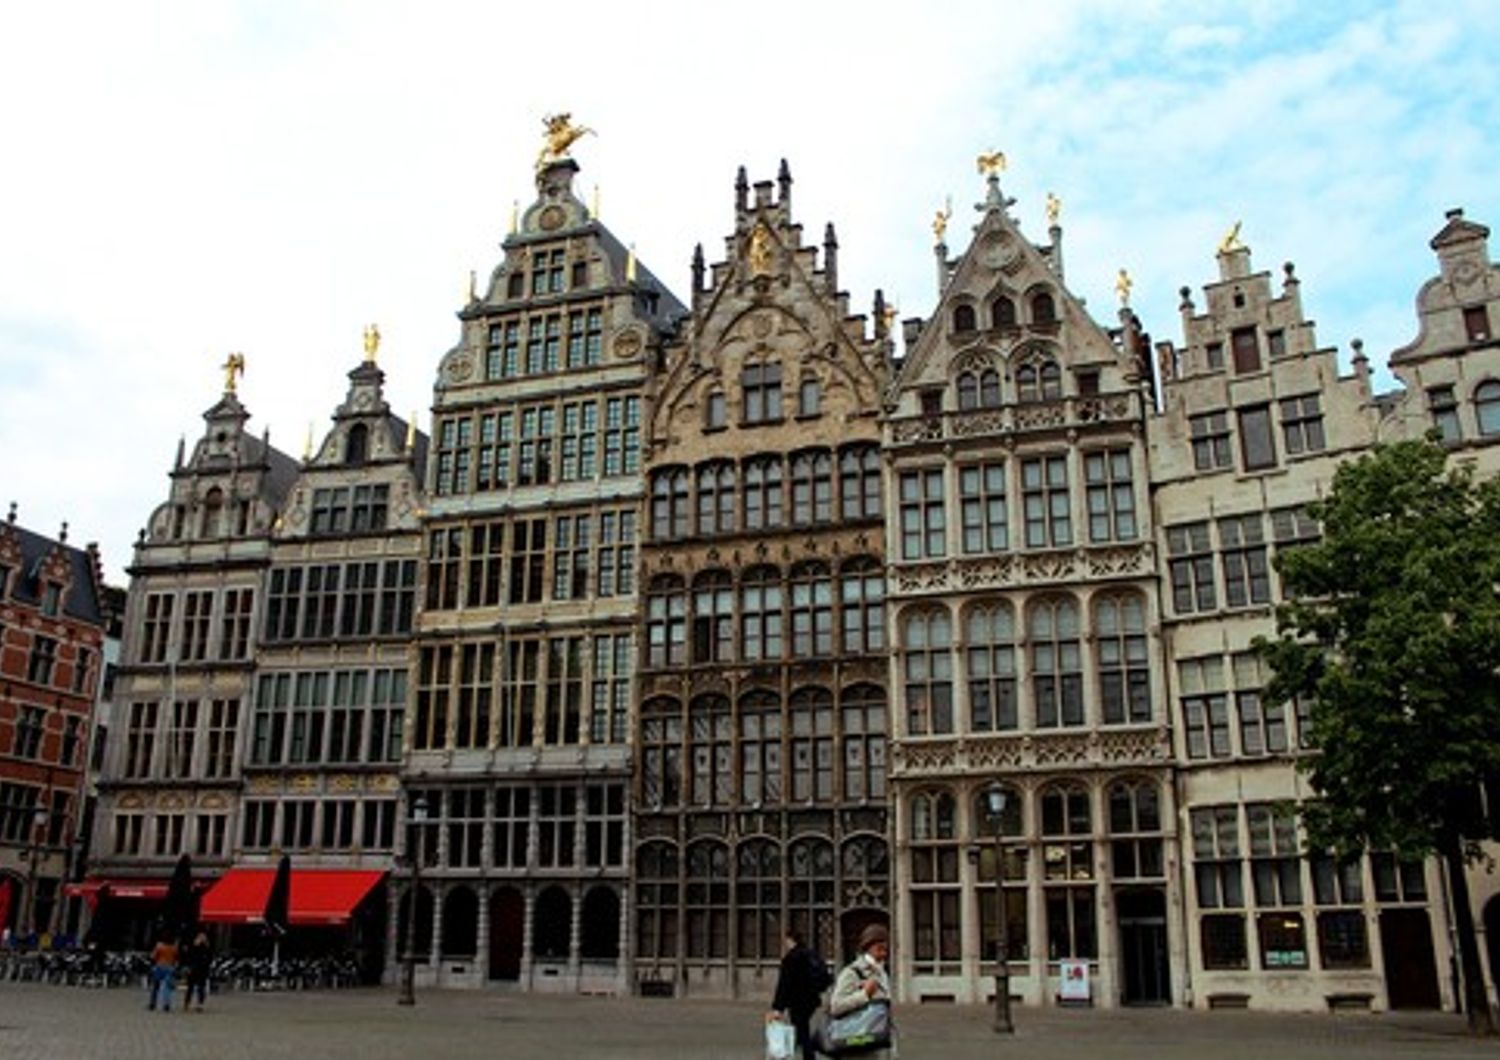 Anversa, sede dell'universit&agrave; in cui studiava Sanda&nbsp;